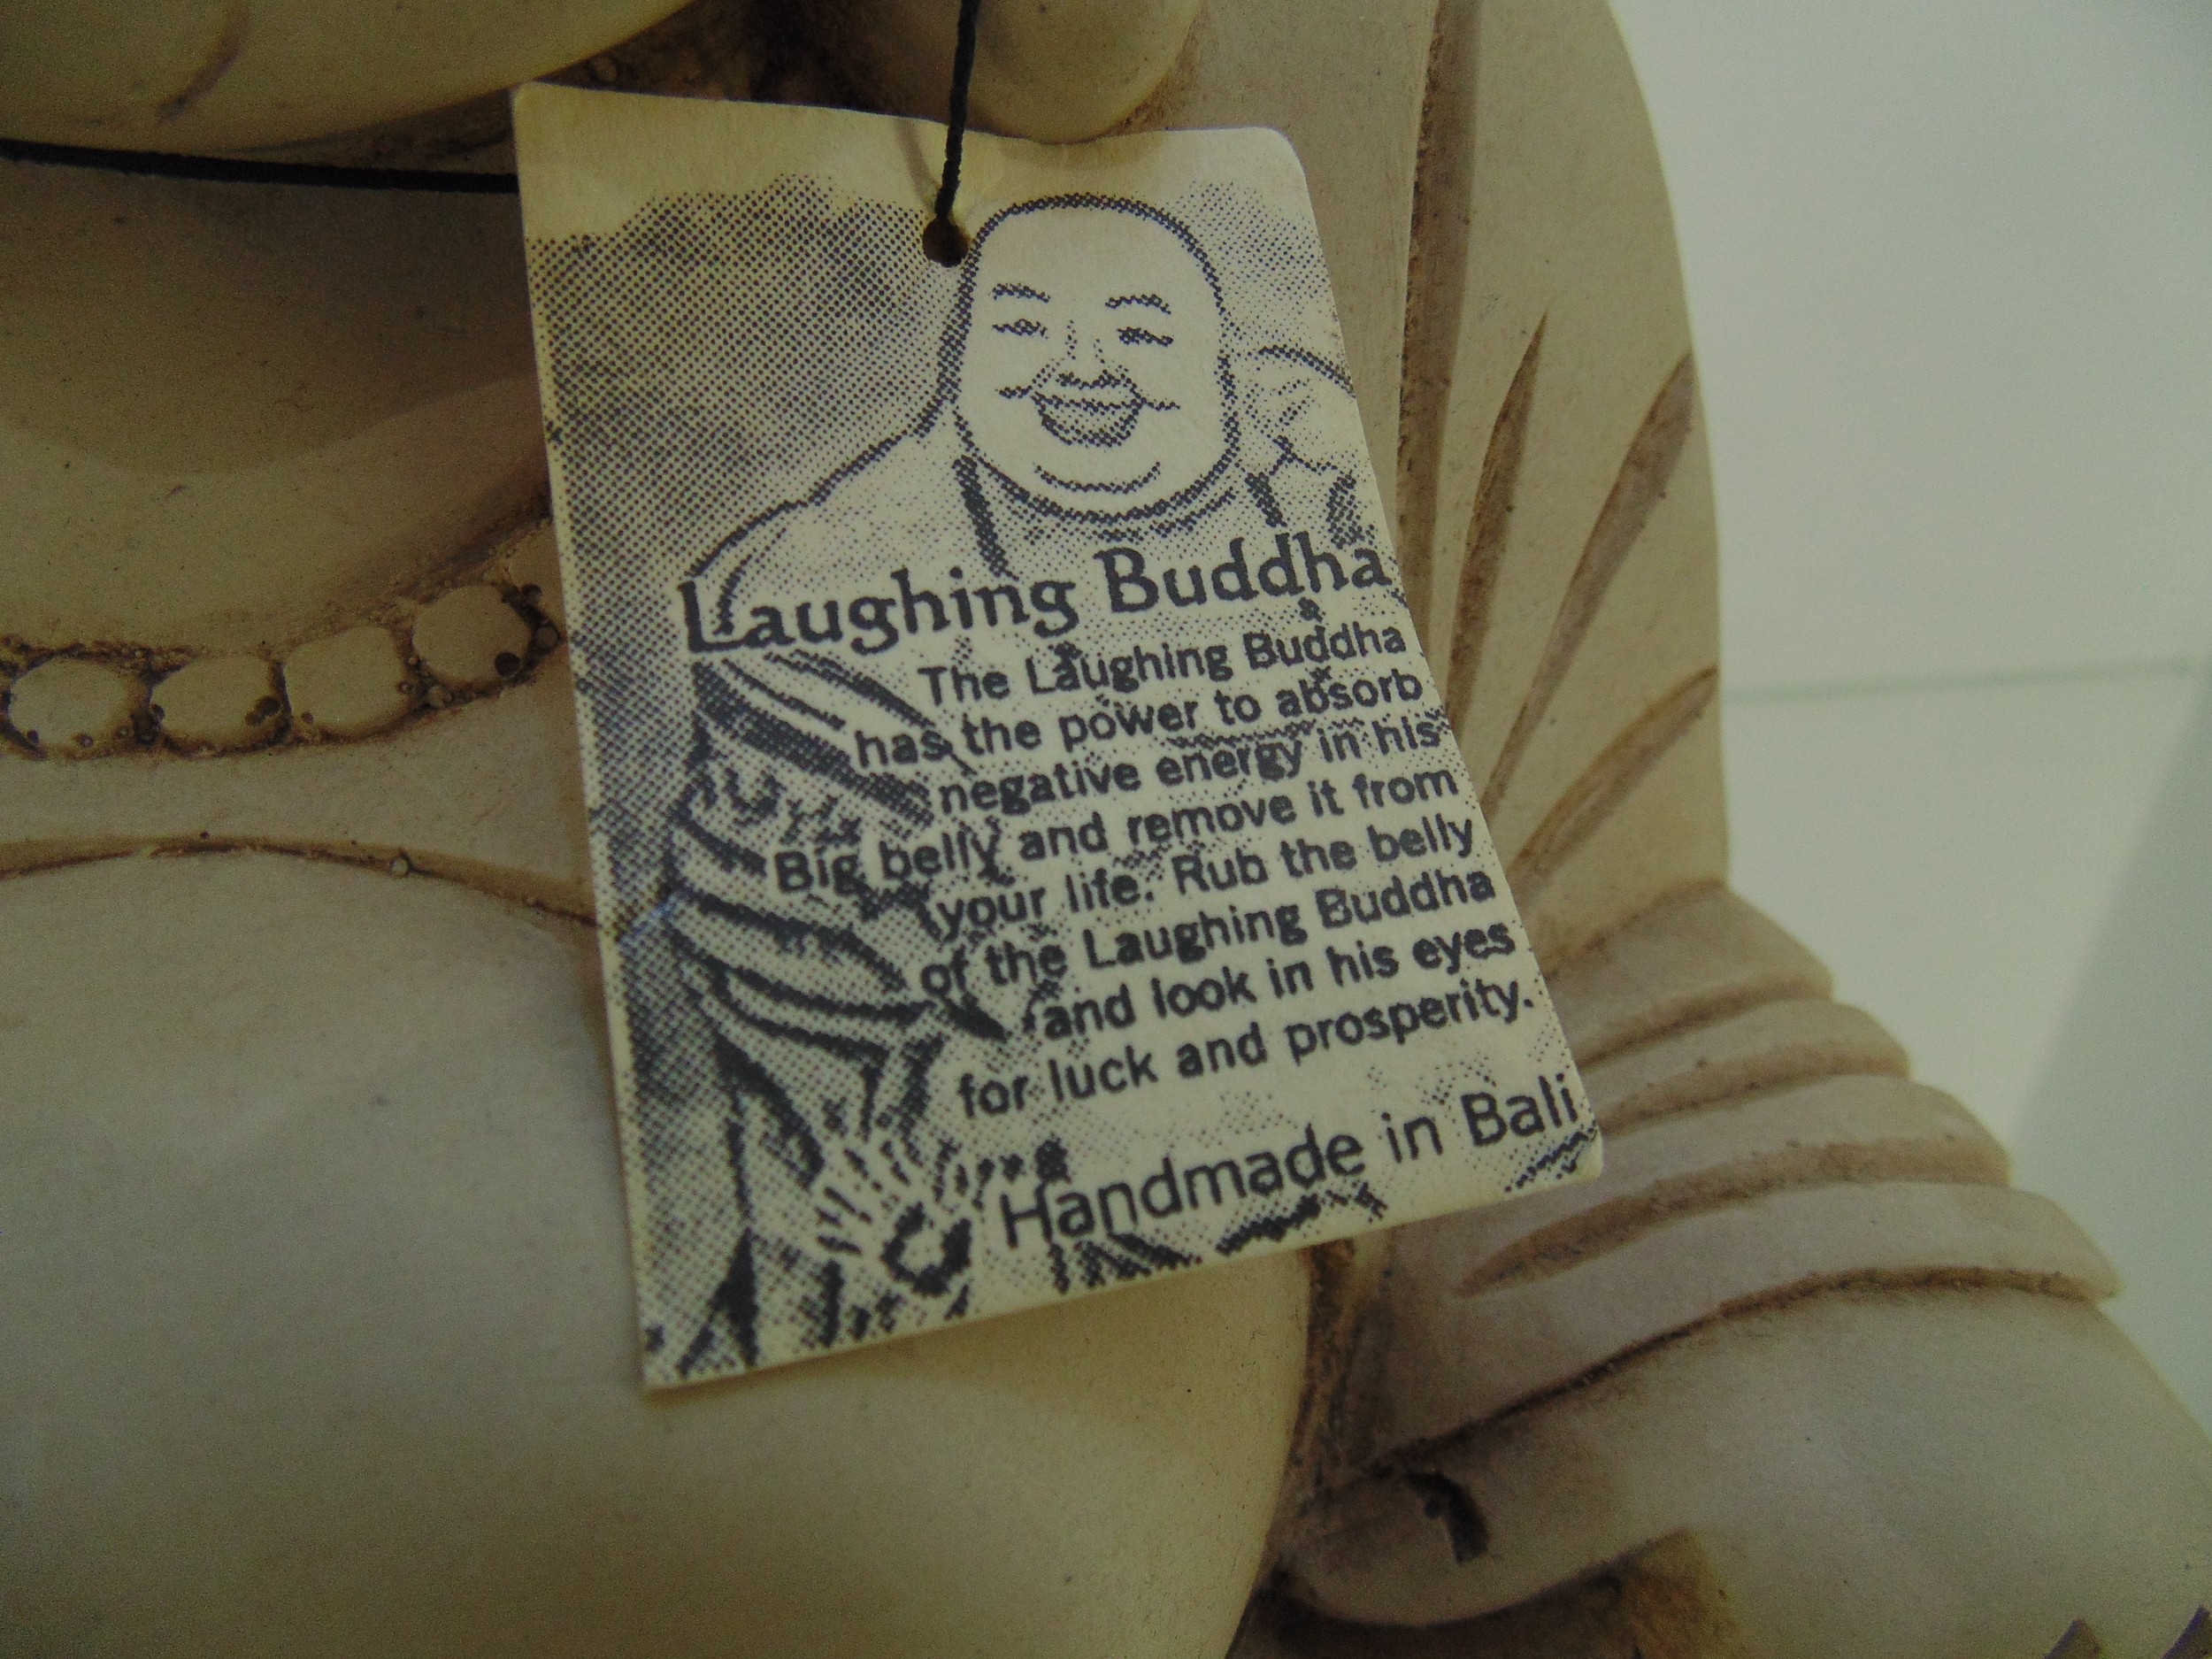 Laughing Buddha - Image 3 of 3